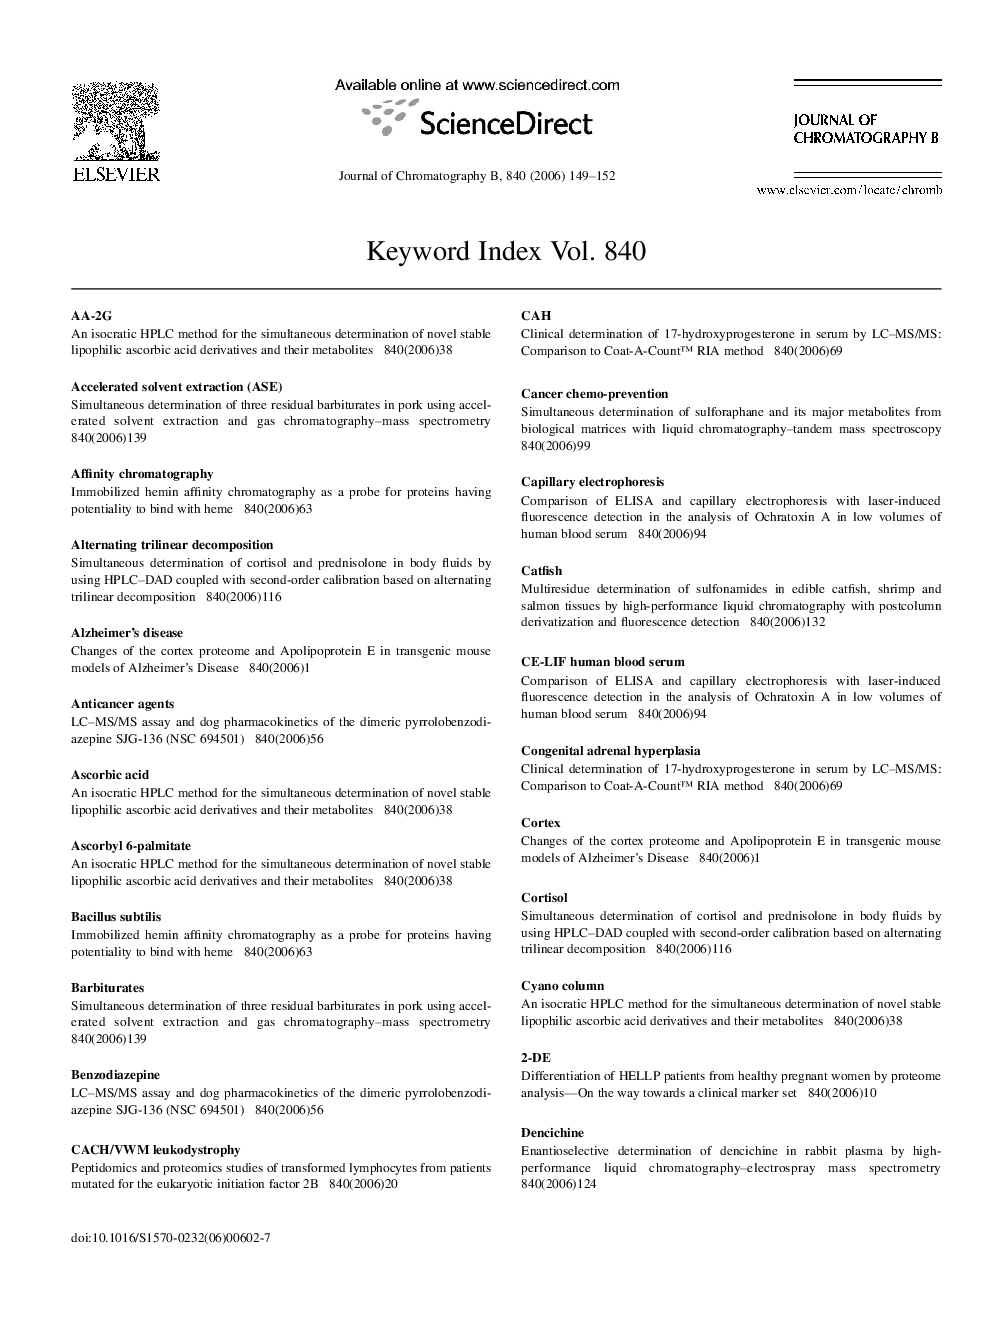 Keyword Index Vol. 840